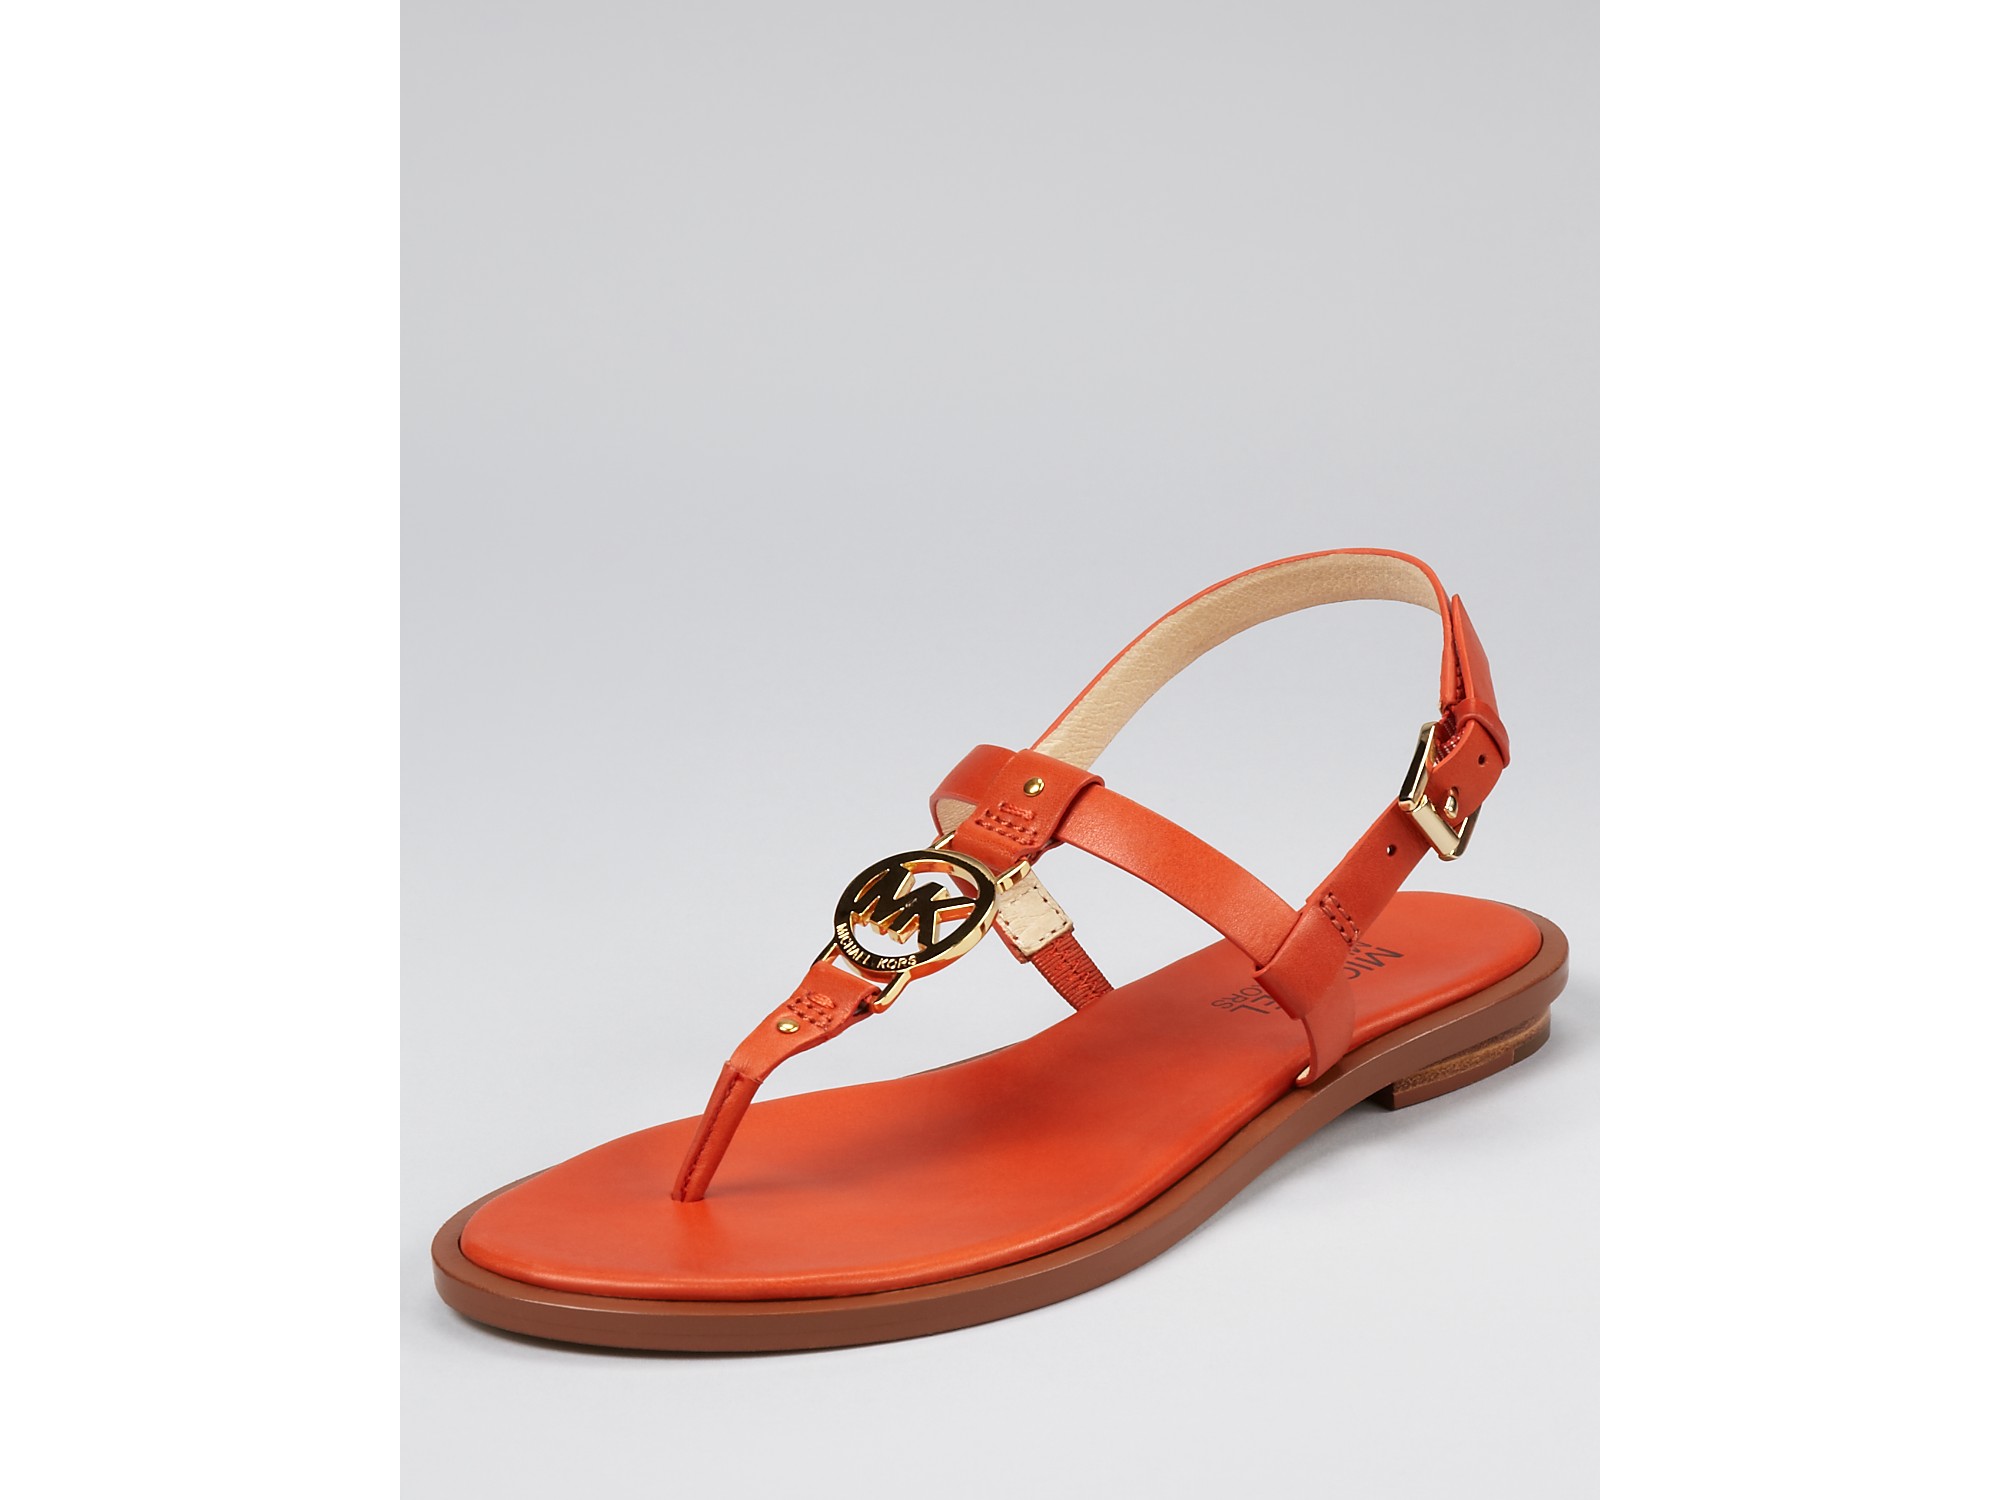 Lyst - Michael kors Sondra Flat Sandals in Orange